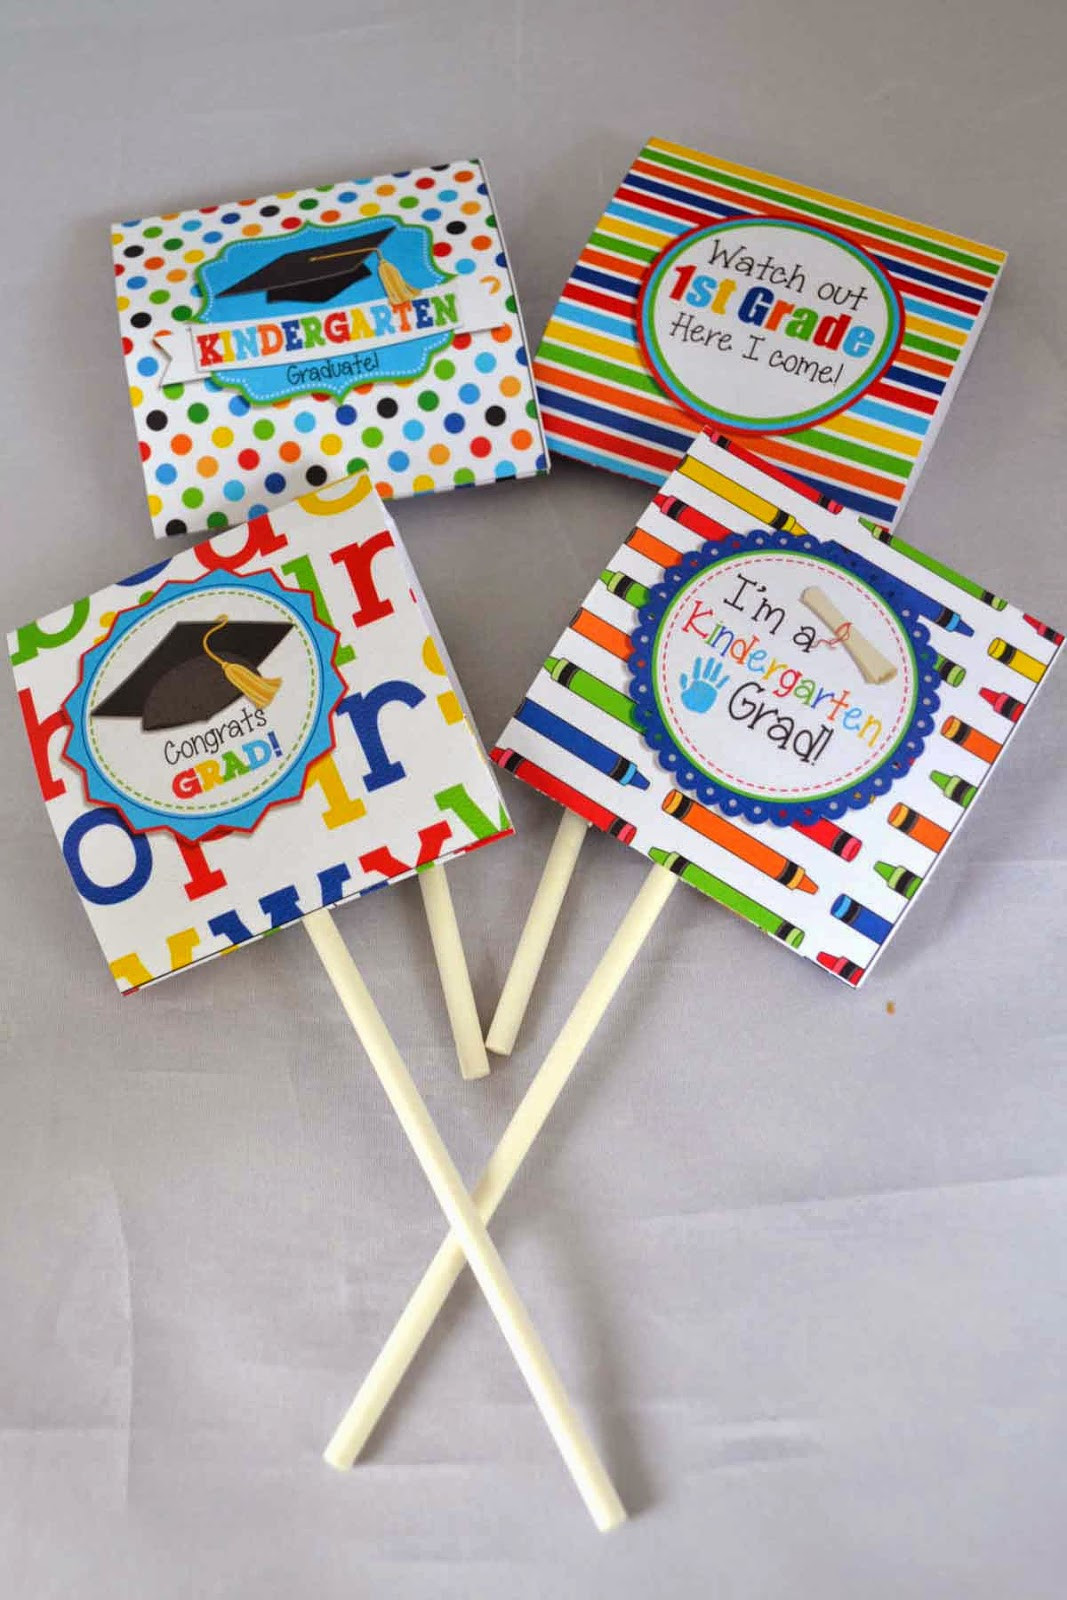 Top 25 Preschool Graduation Gift Ideas Home Family Style And Art Ideas